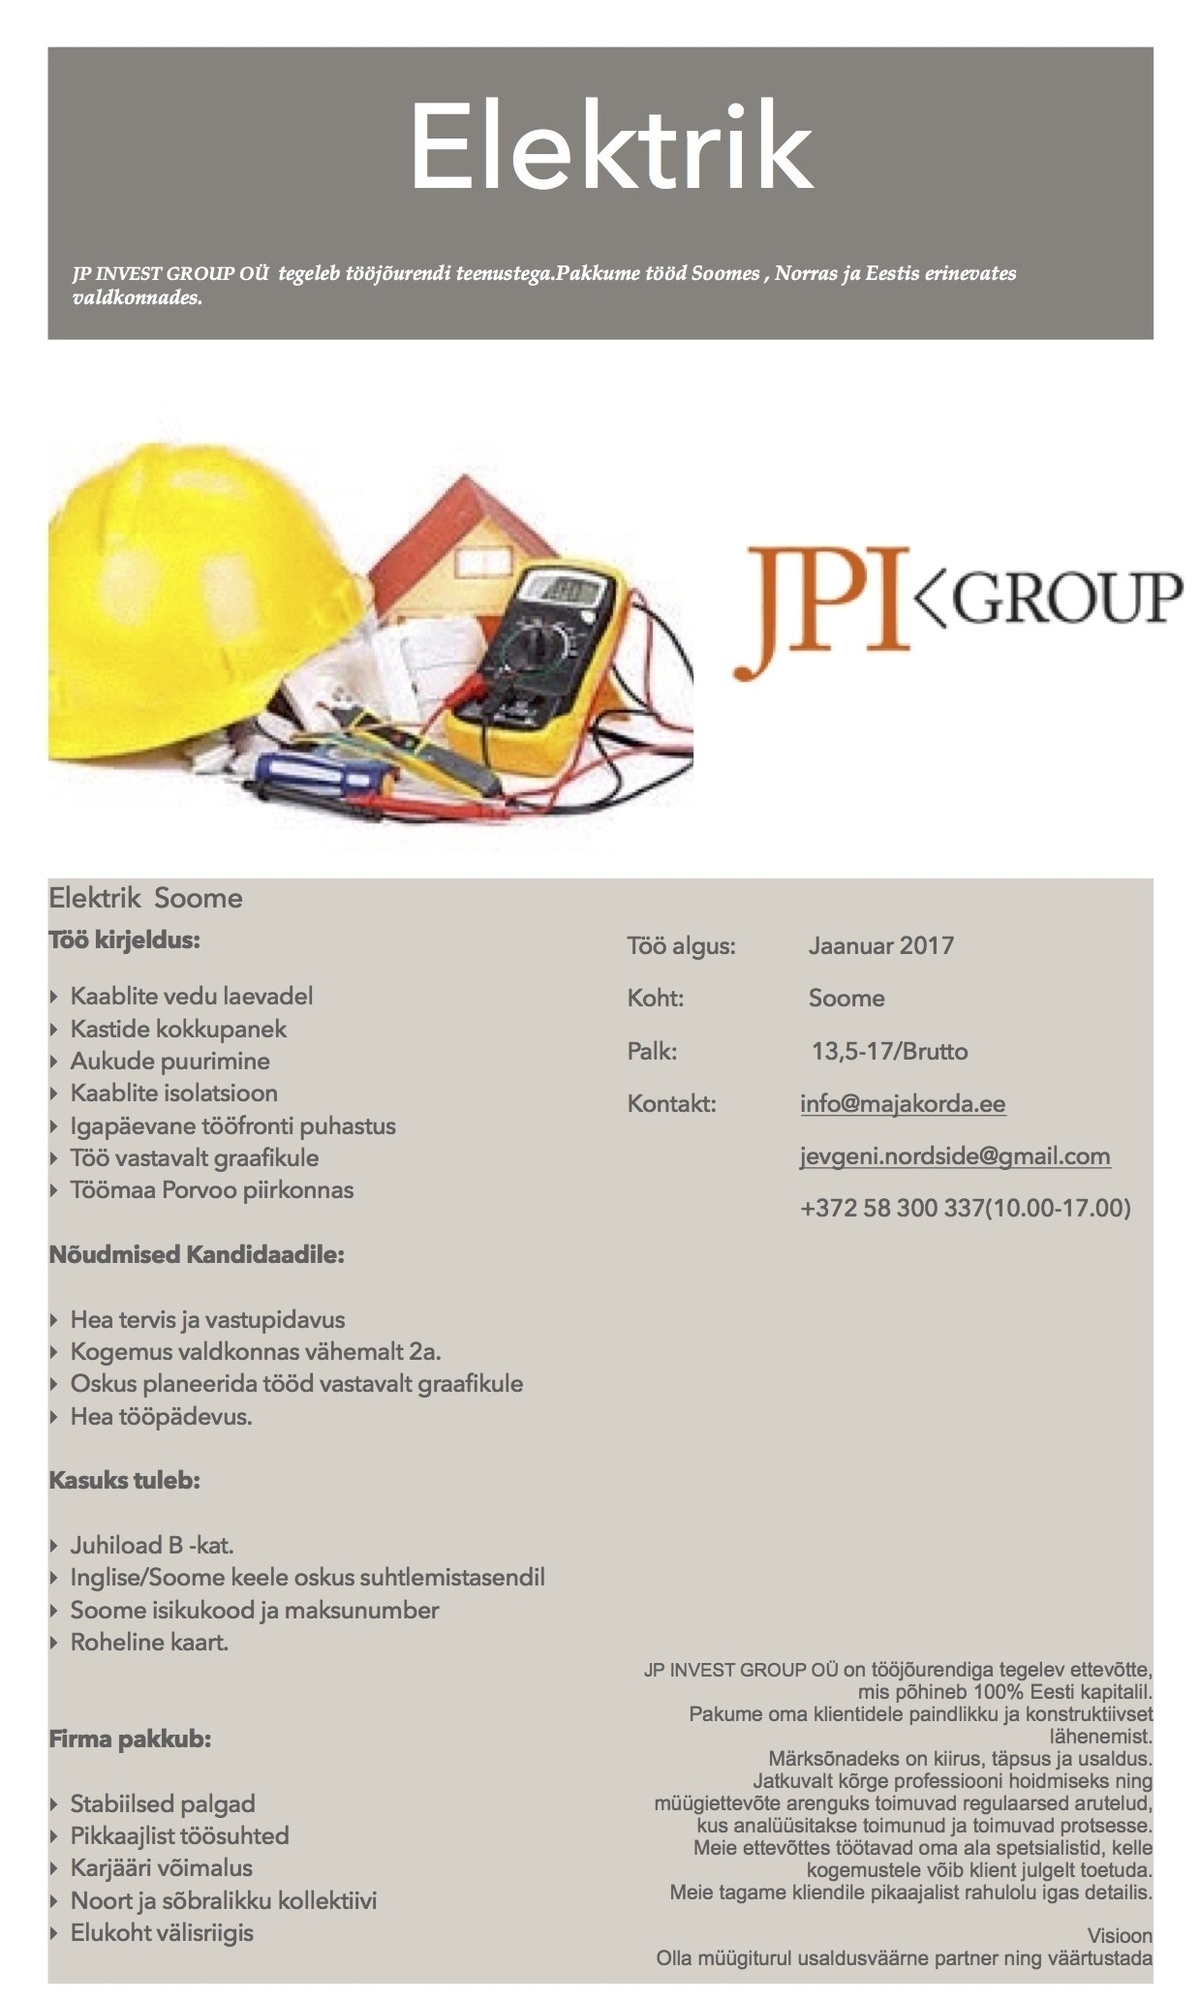 JP INVEST GROUP OÜ Elektrik